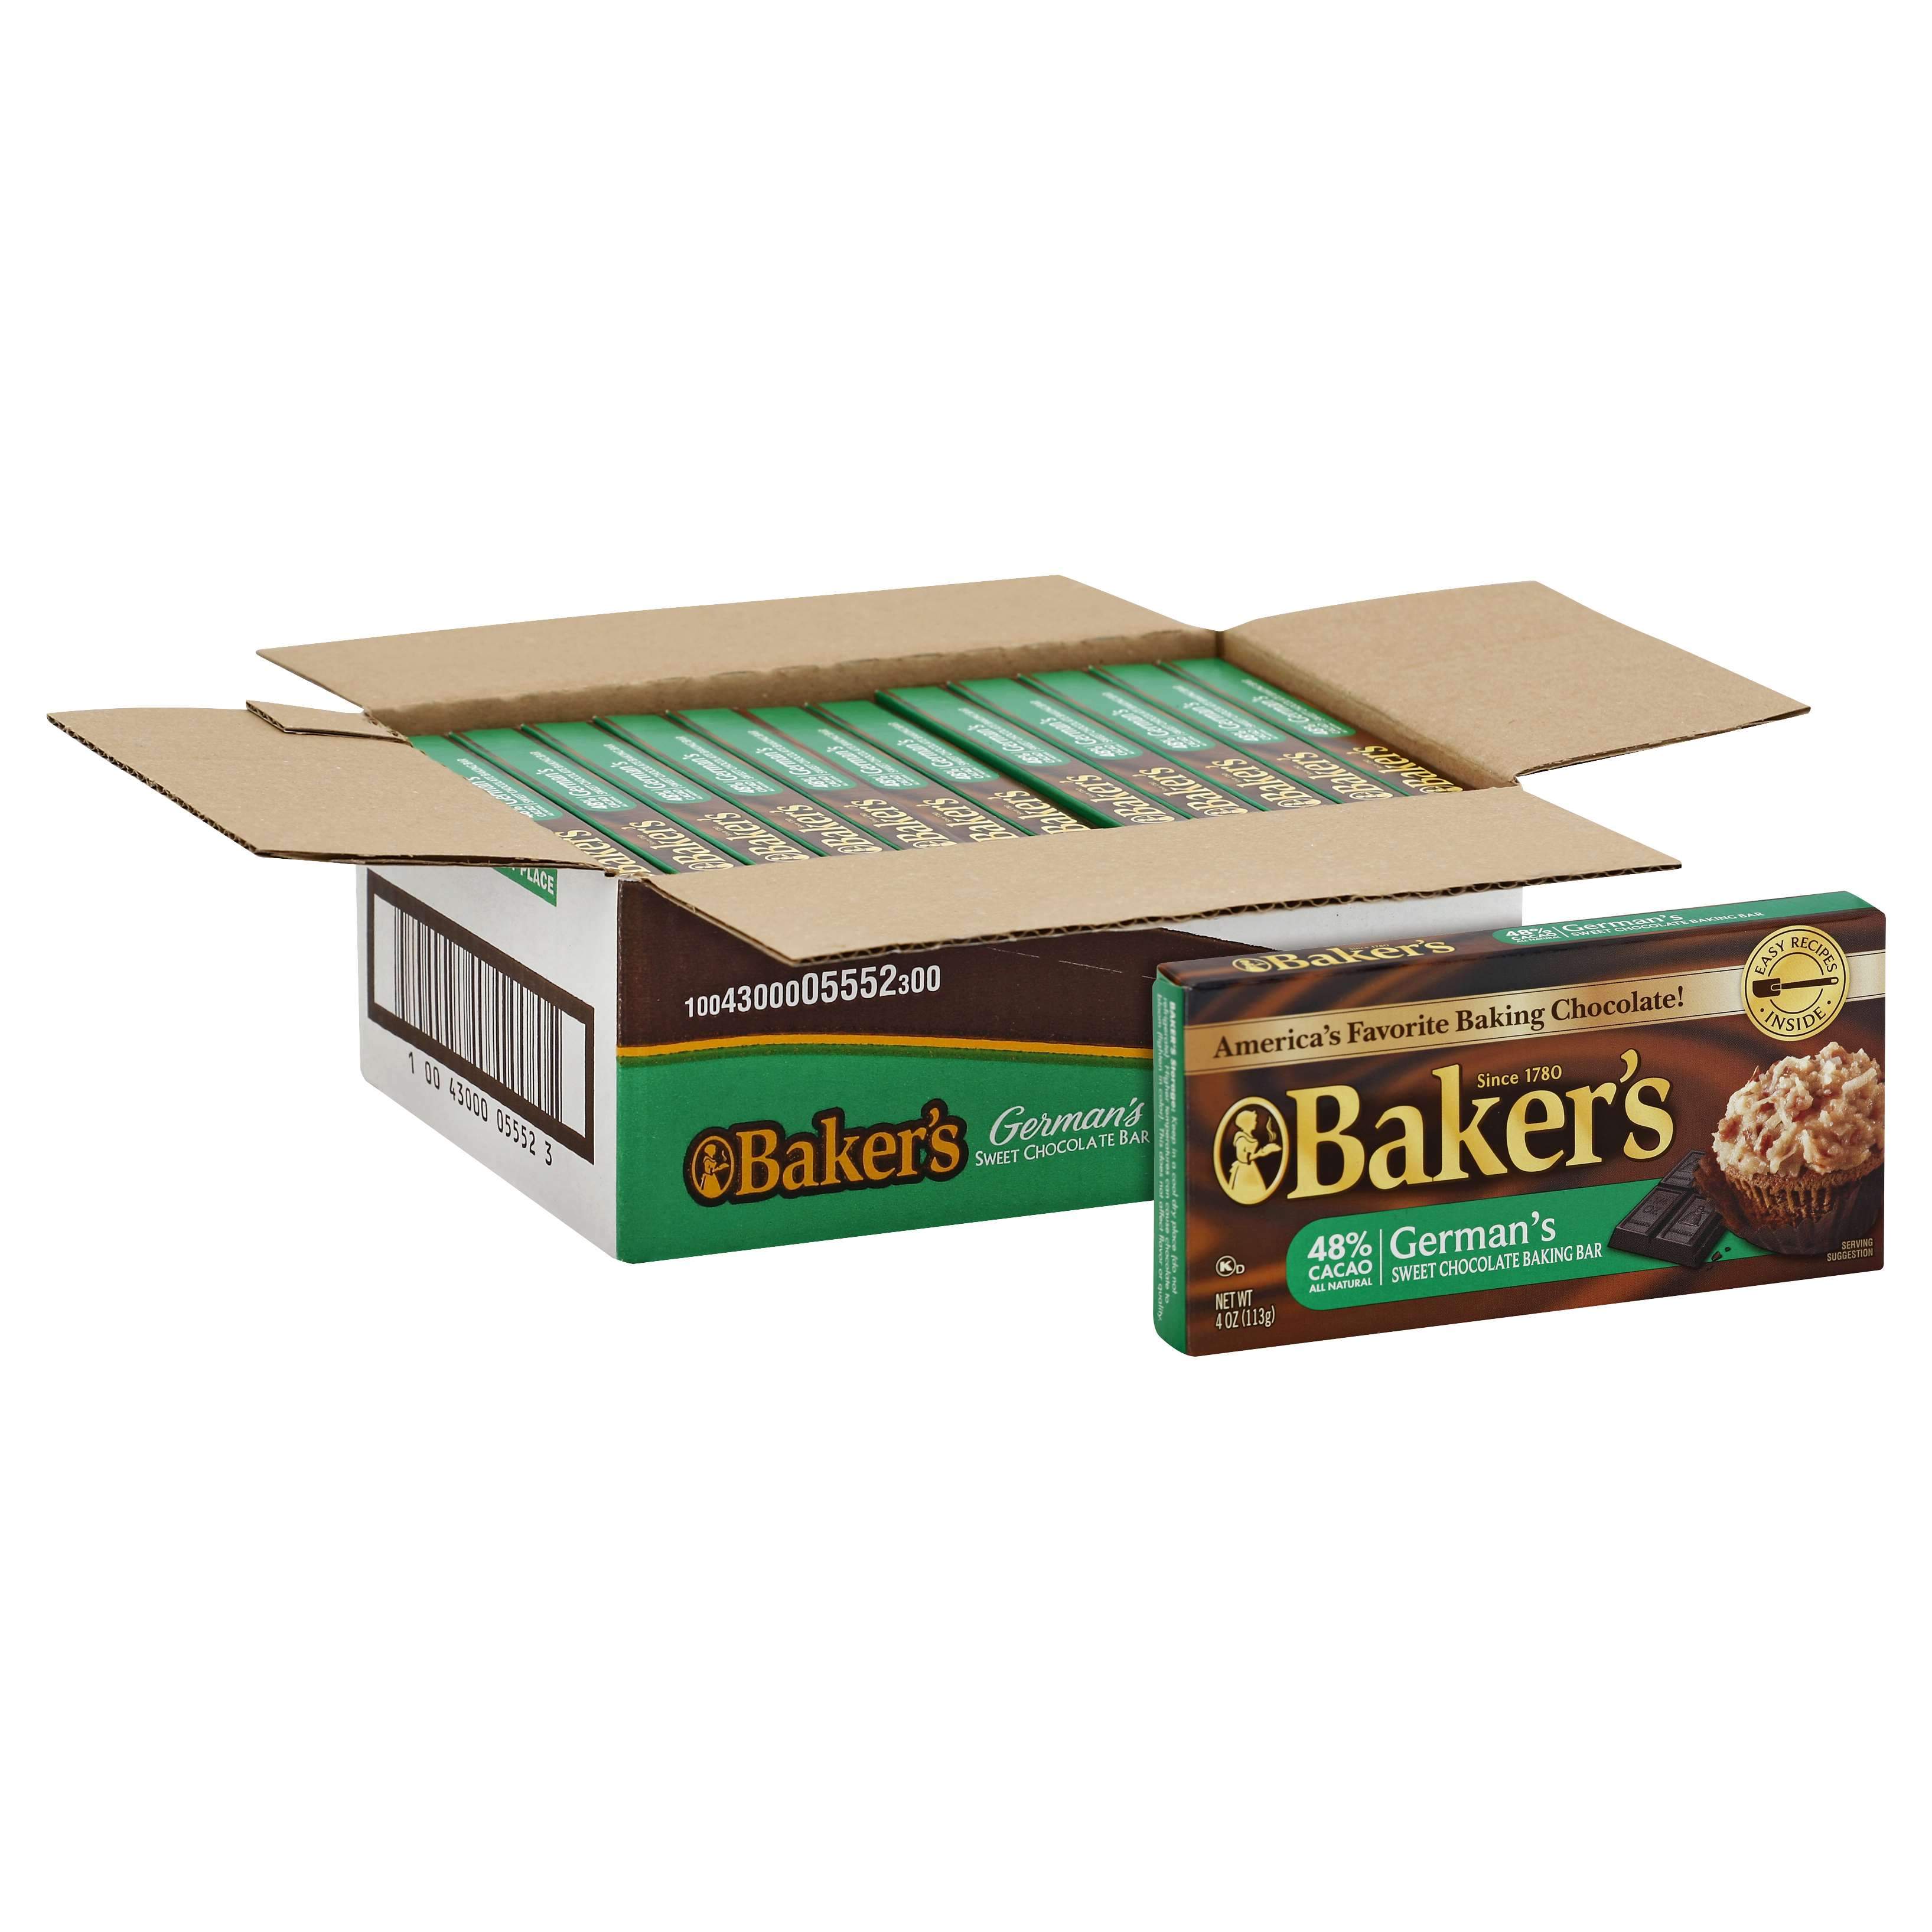 Baker's Chocolate Meltable Baker's German's 4 Oz-12 Count 